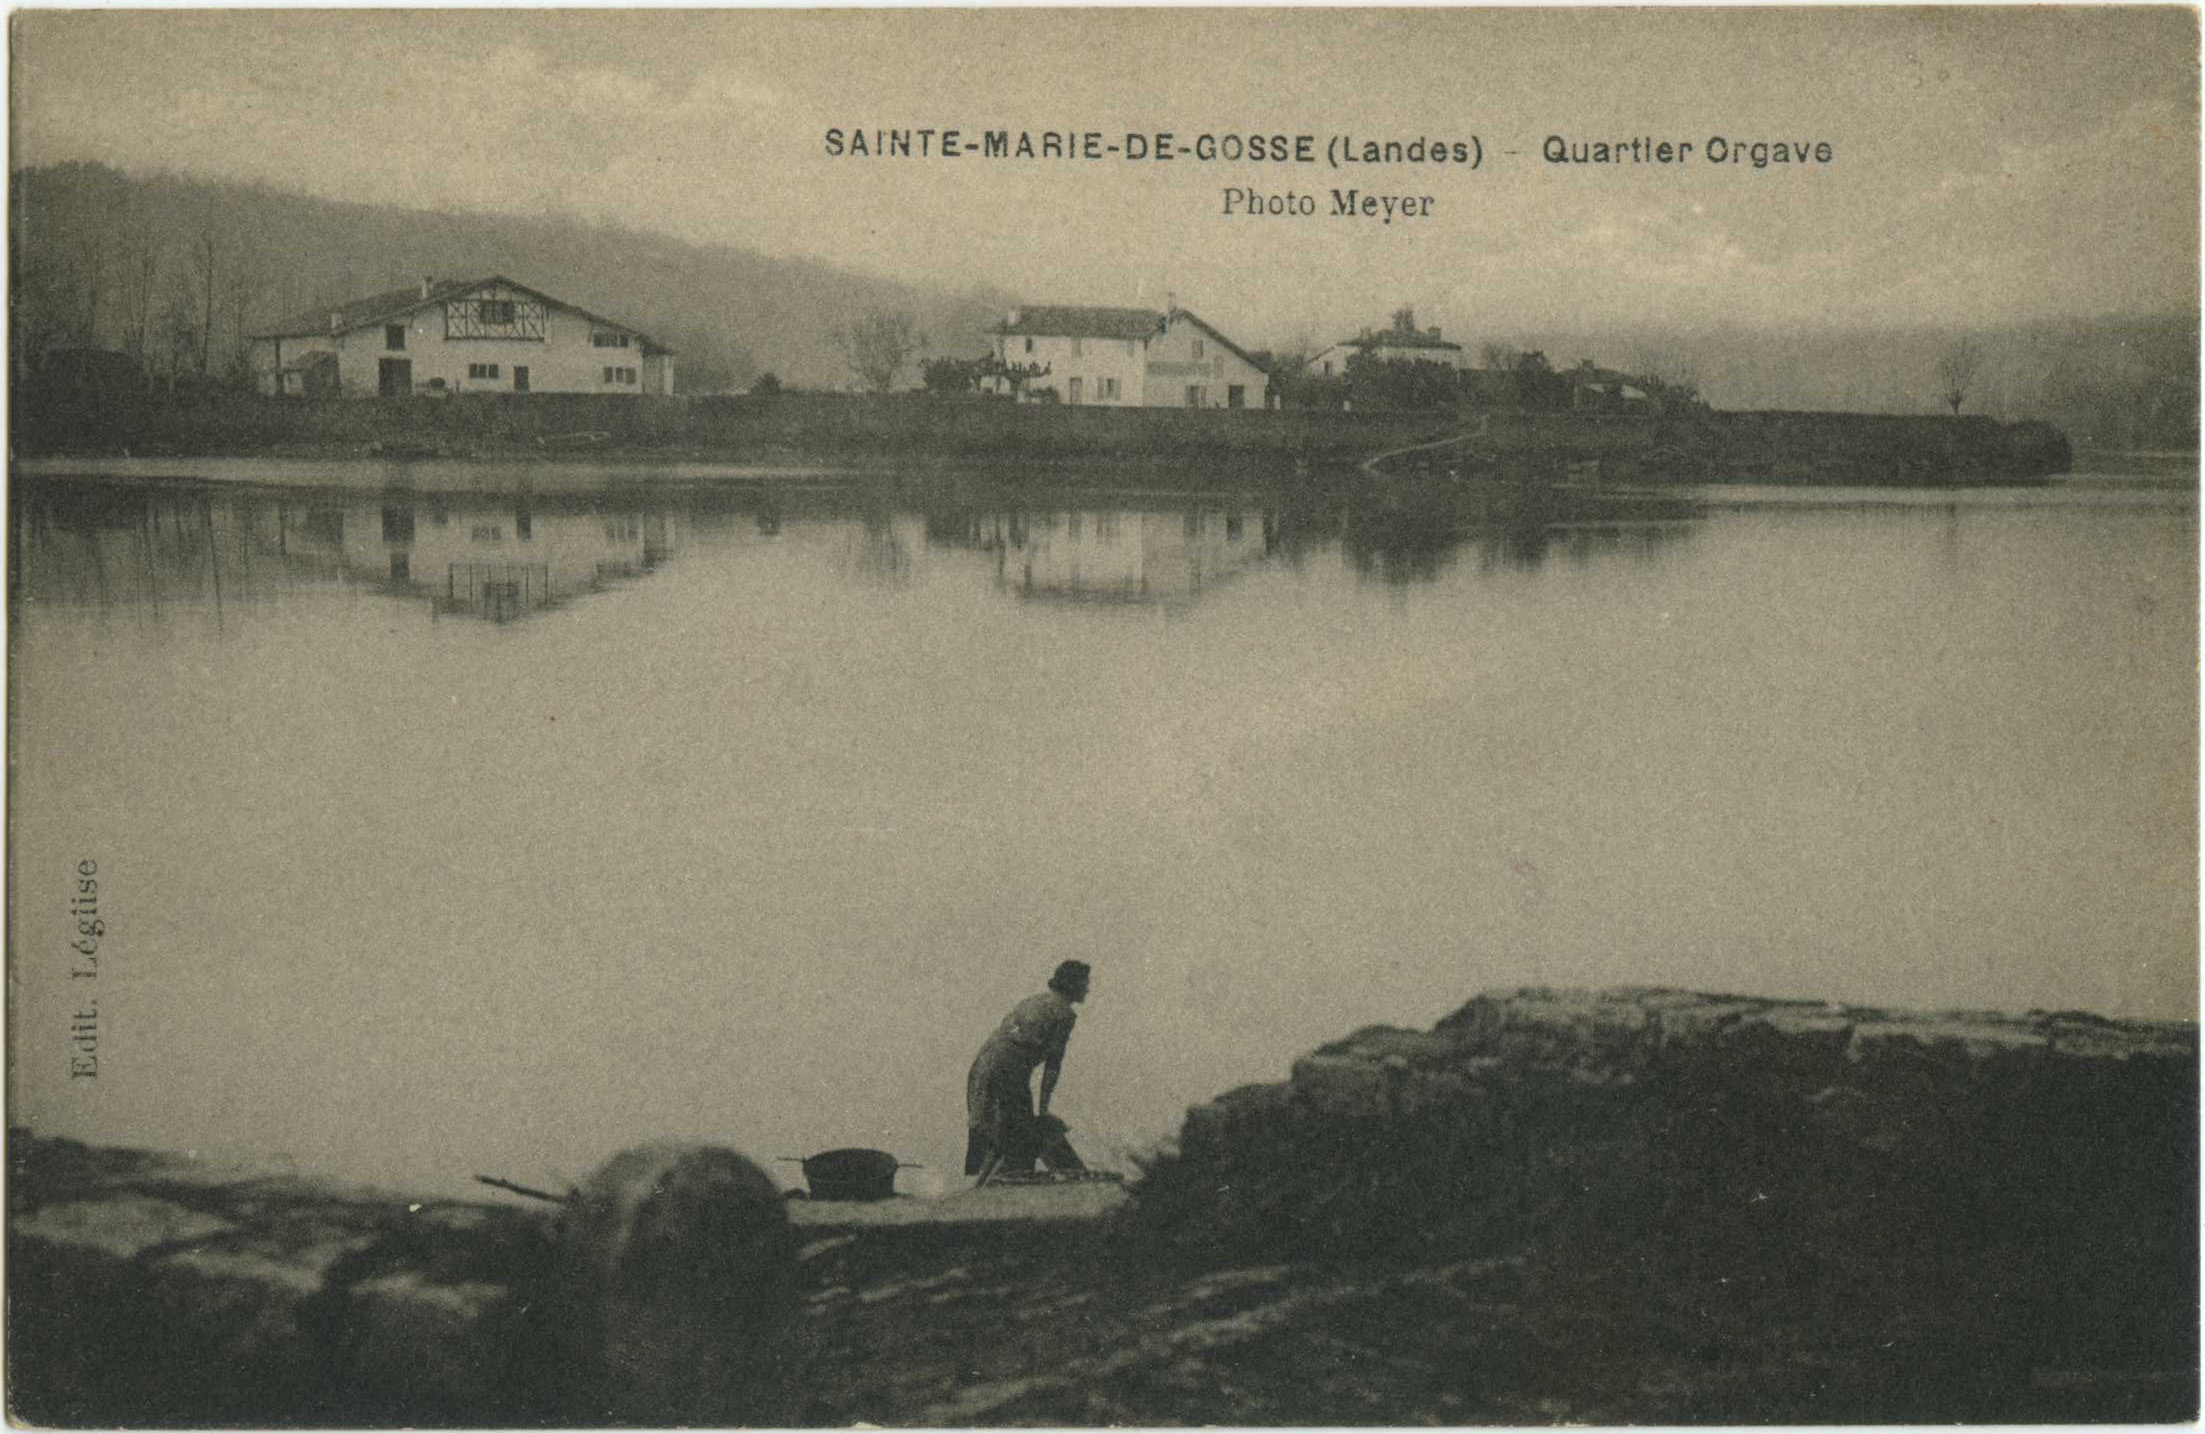 Sainte-Marie-de-Gosse - Quartier Orgave